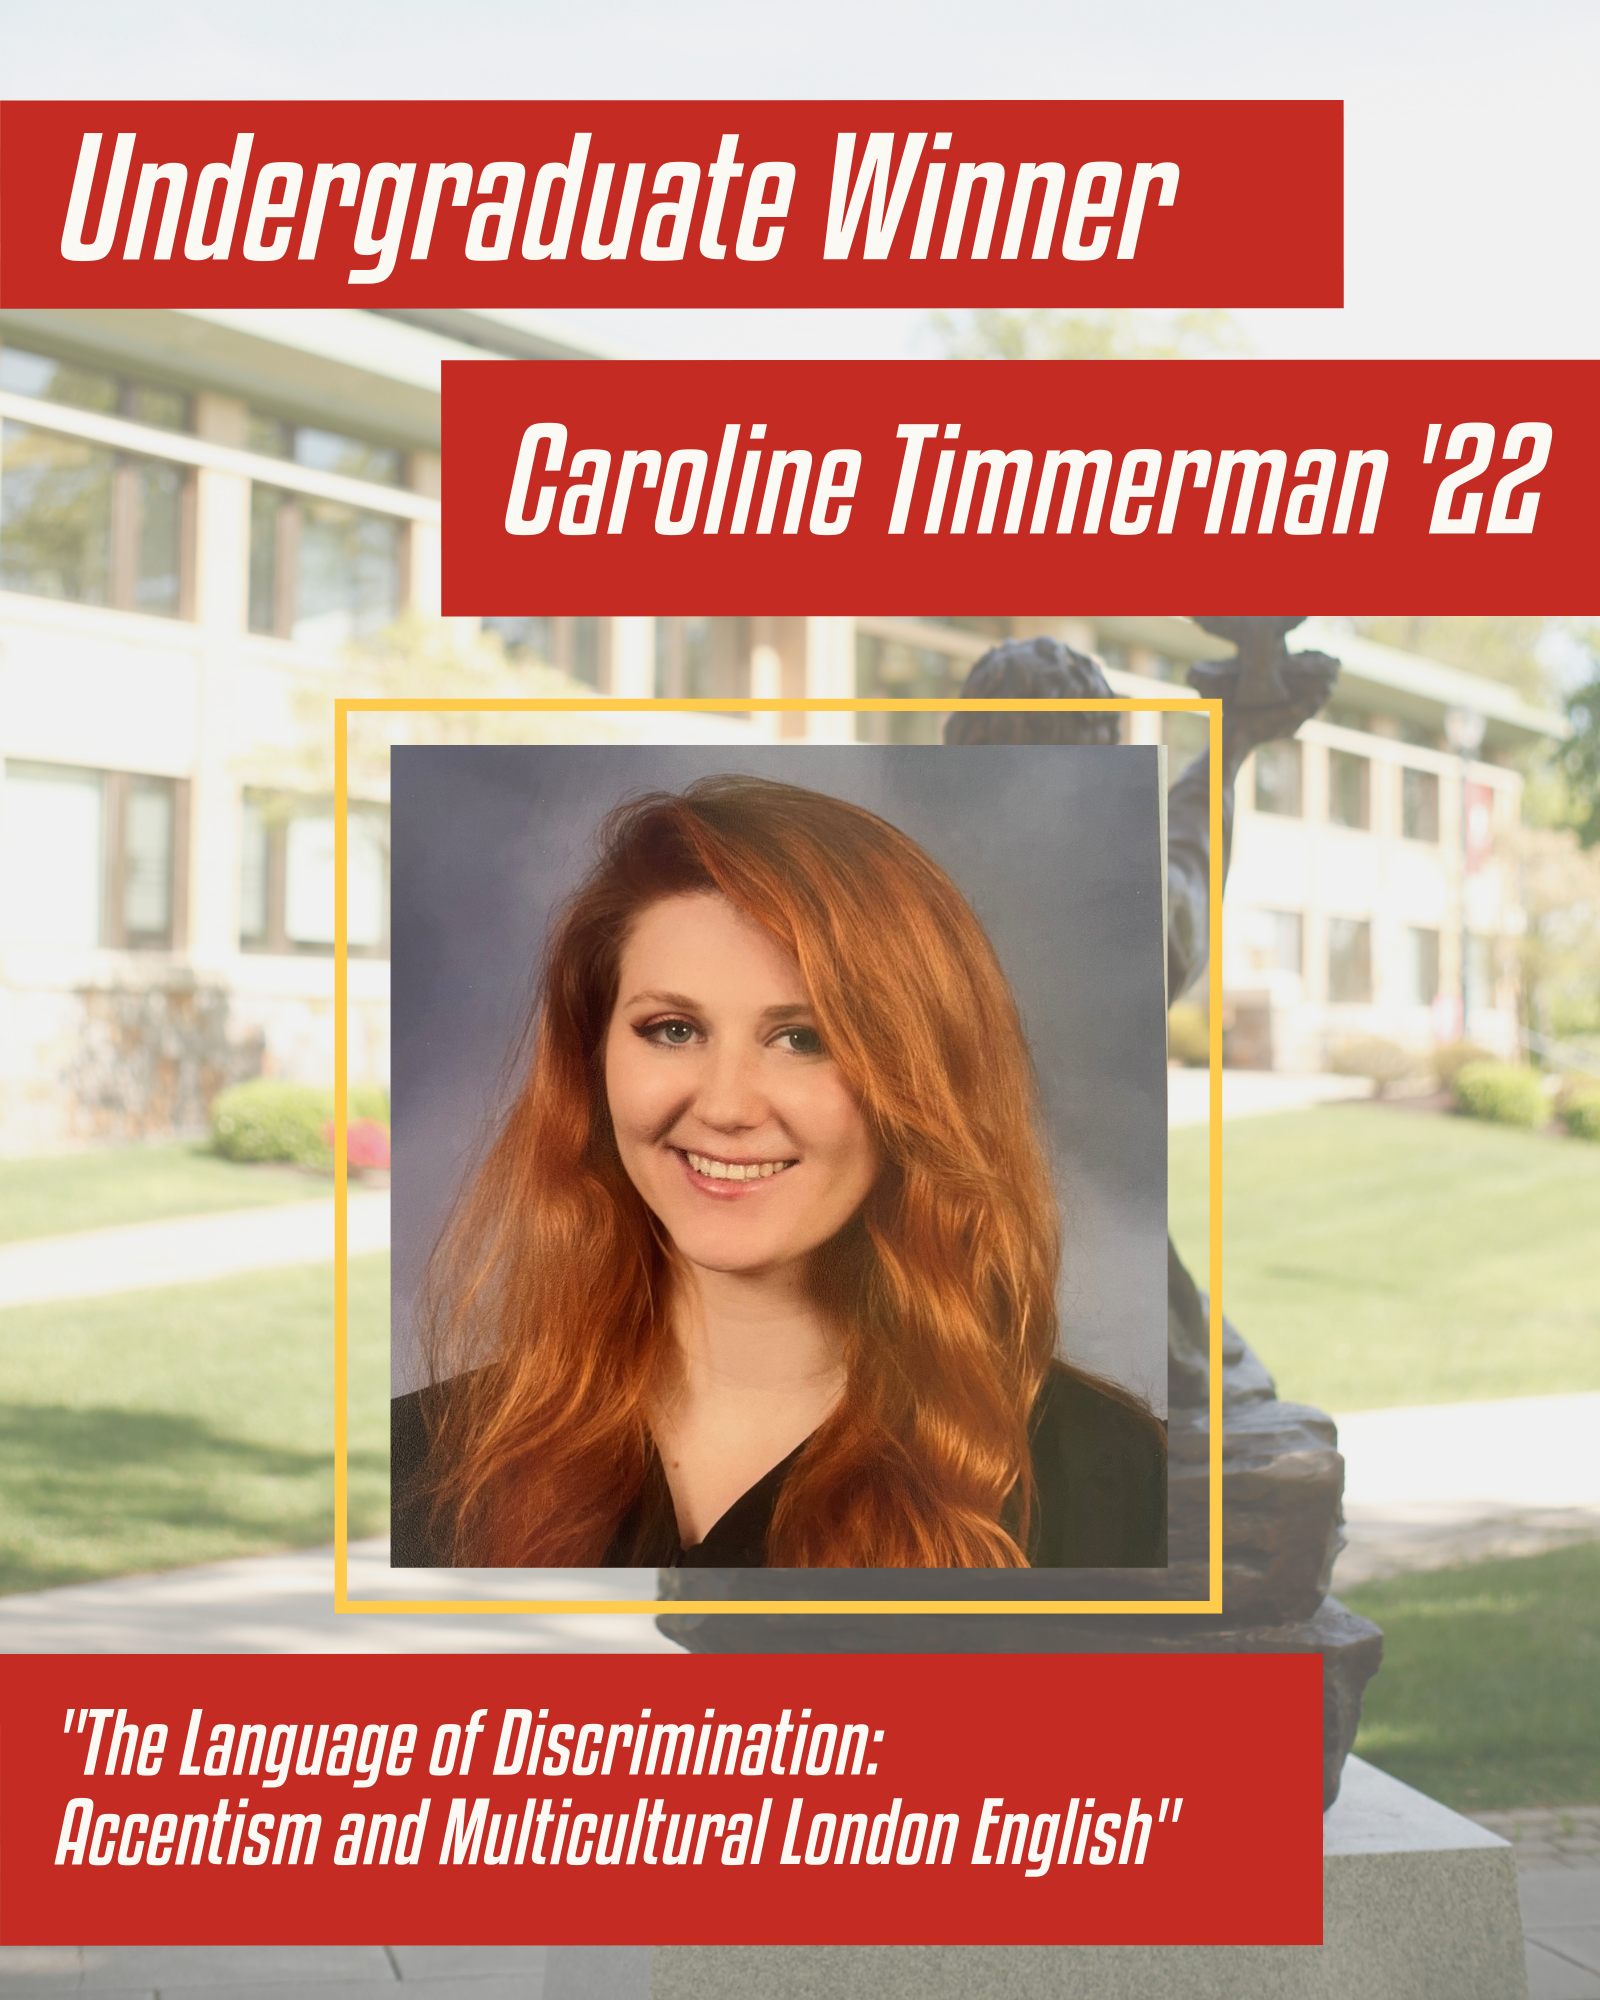 2022 undergraduate student winner Caroline Timmerman